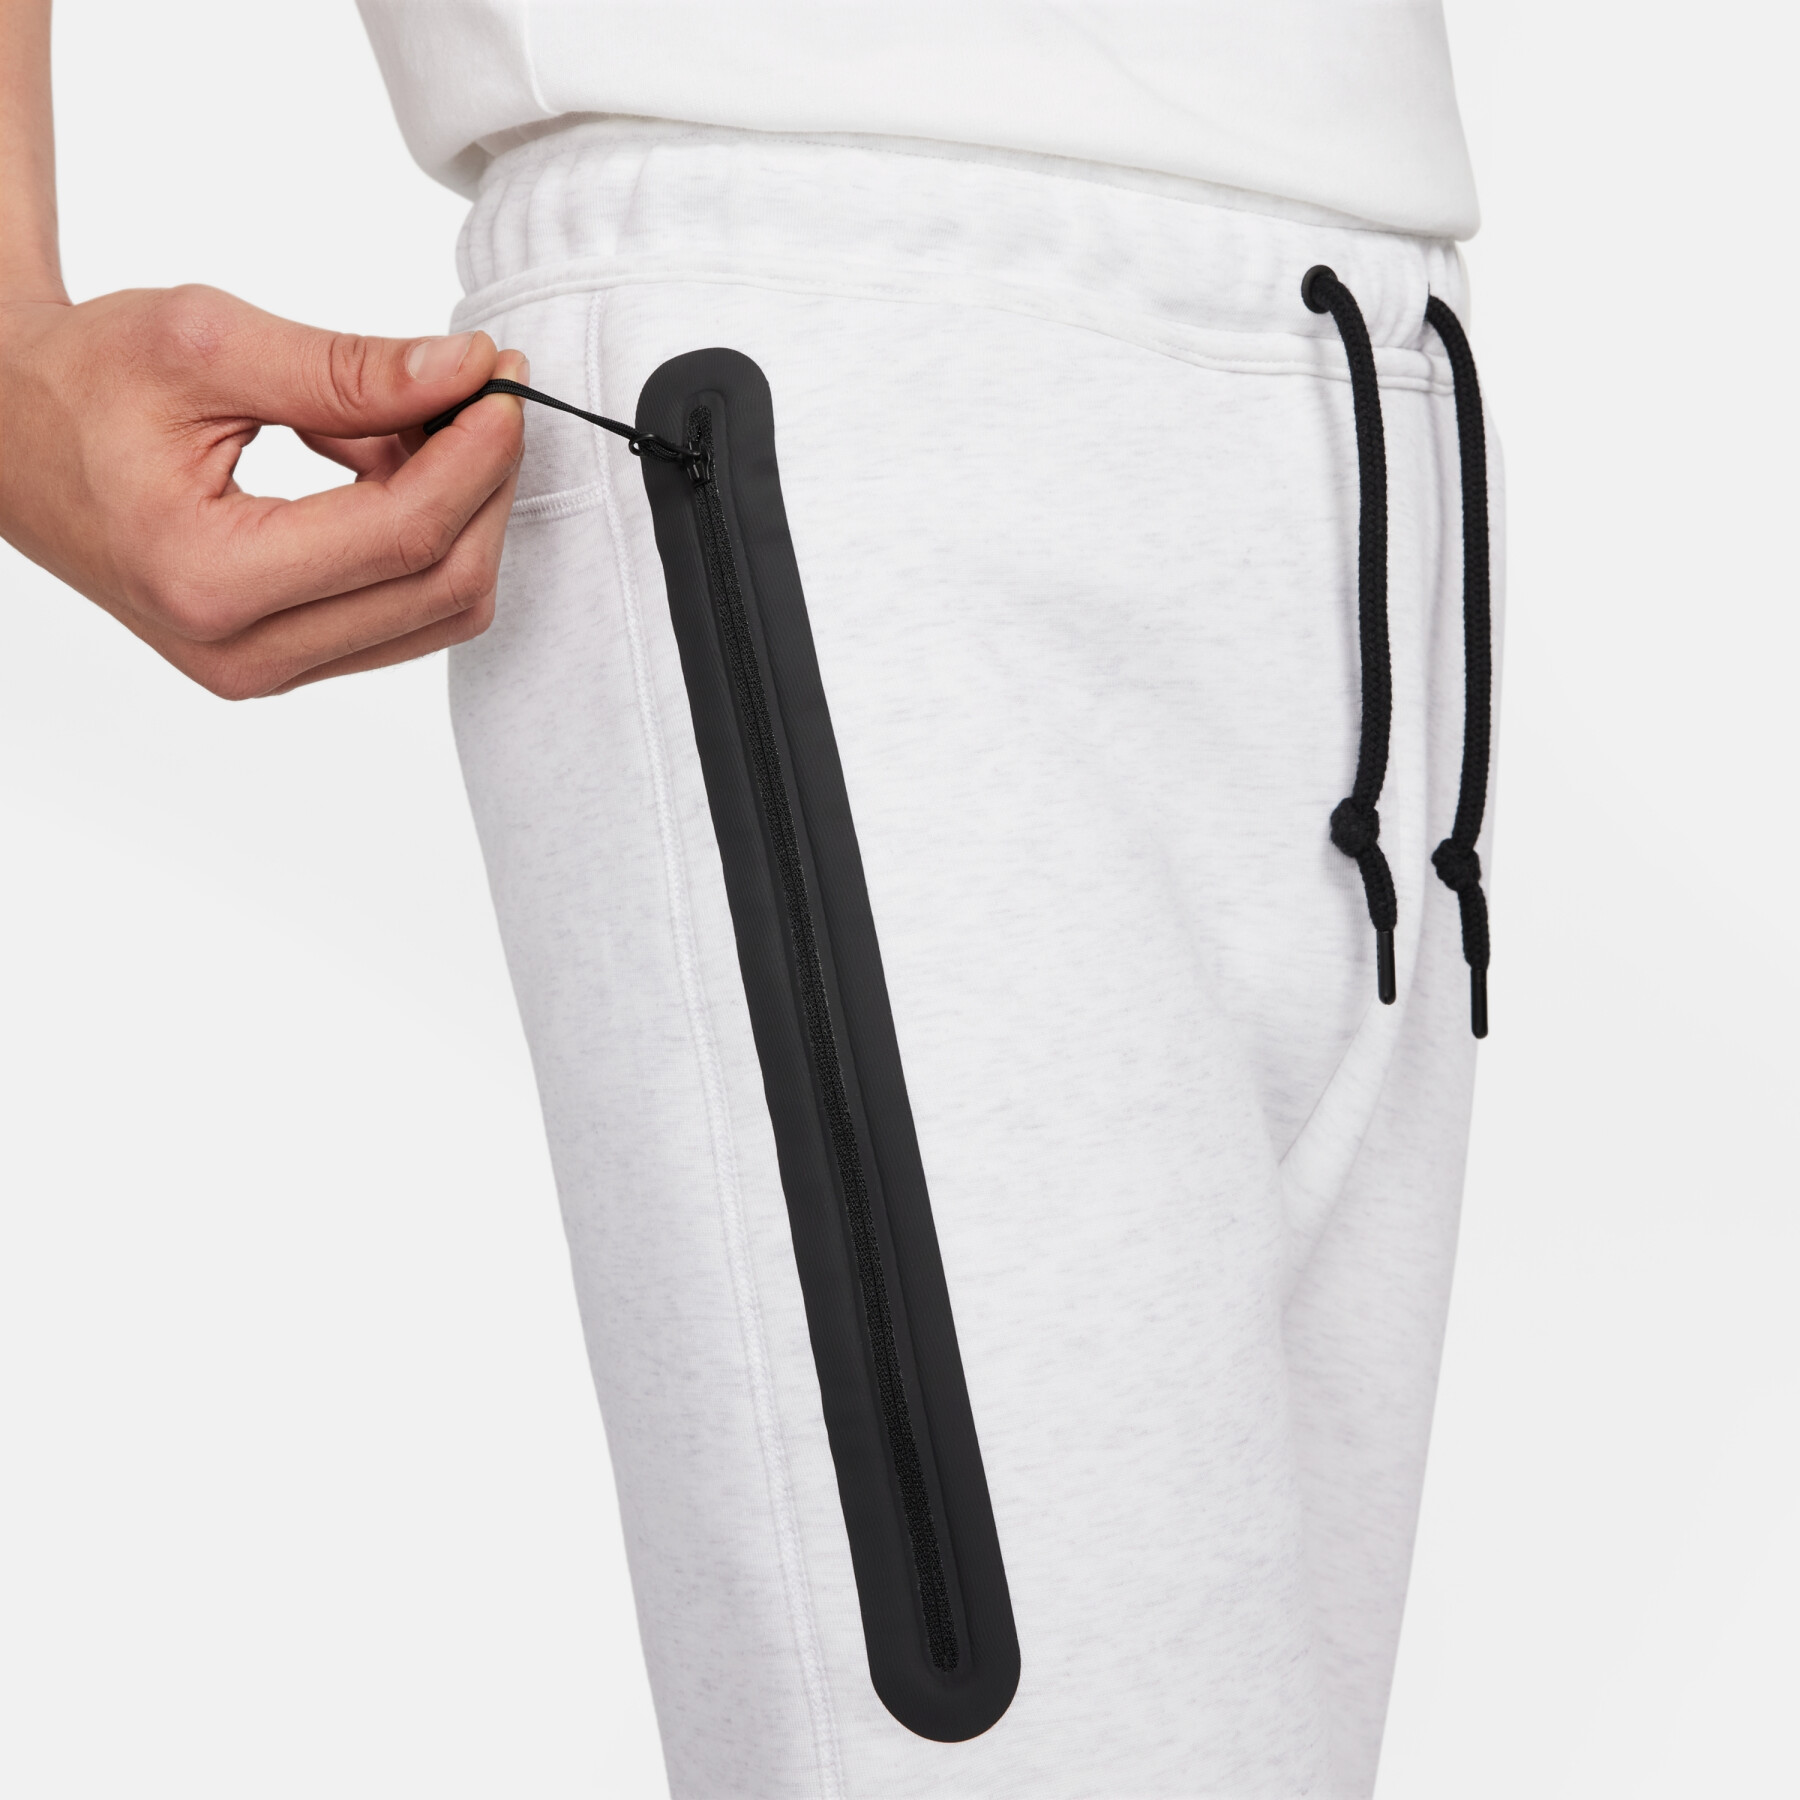 Pantalón de chándal slim-fit Nike Tech Fleece